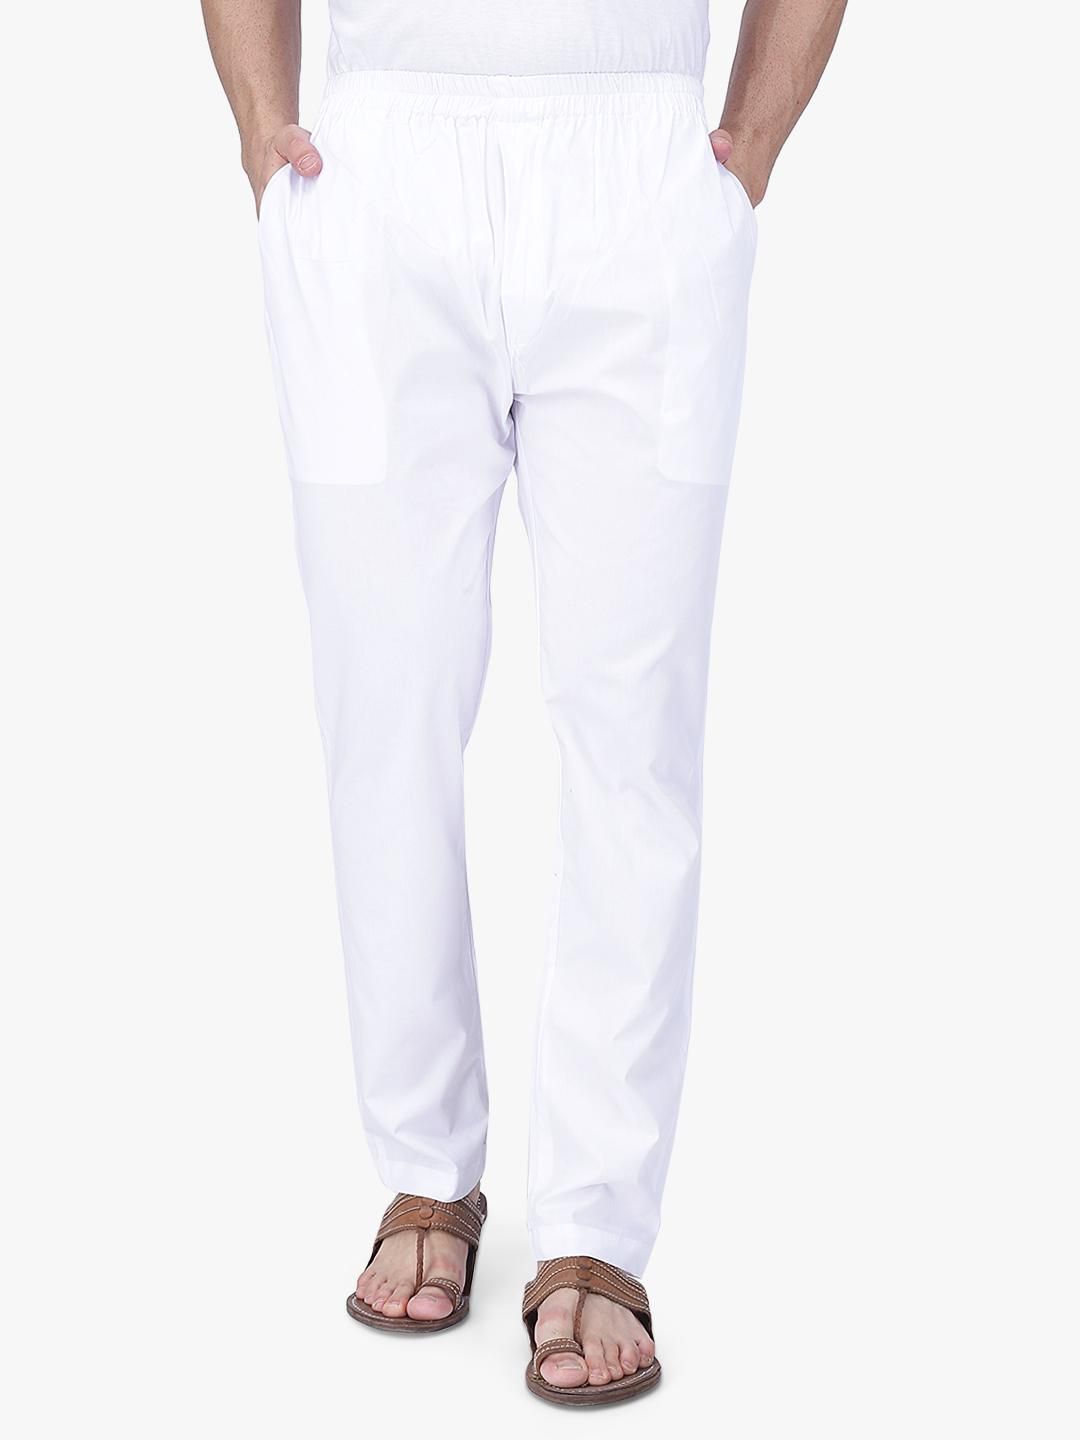 Buy Plus Size Churidar Pants & Plus Size White Churidar Pants - Apella